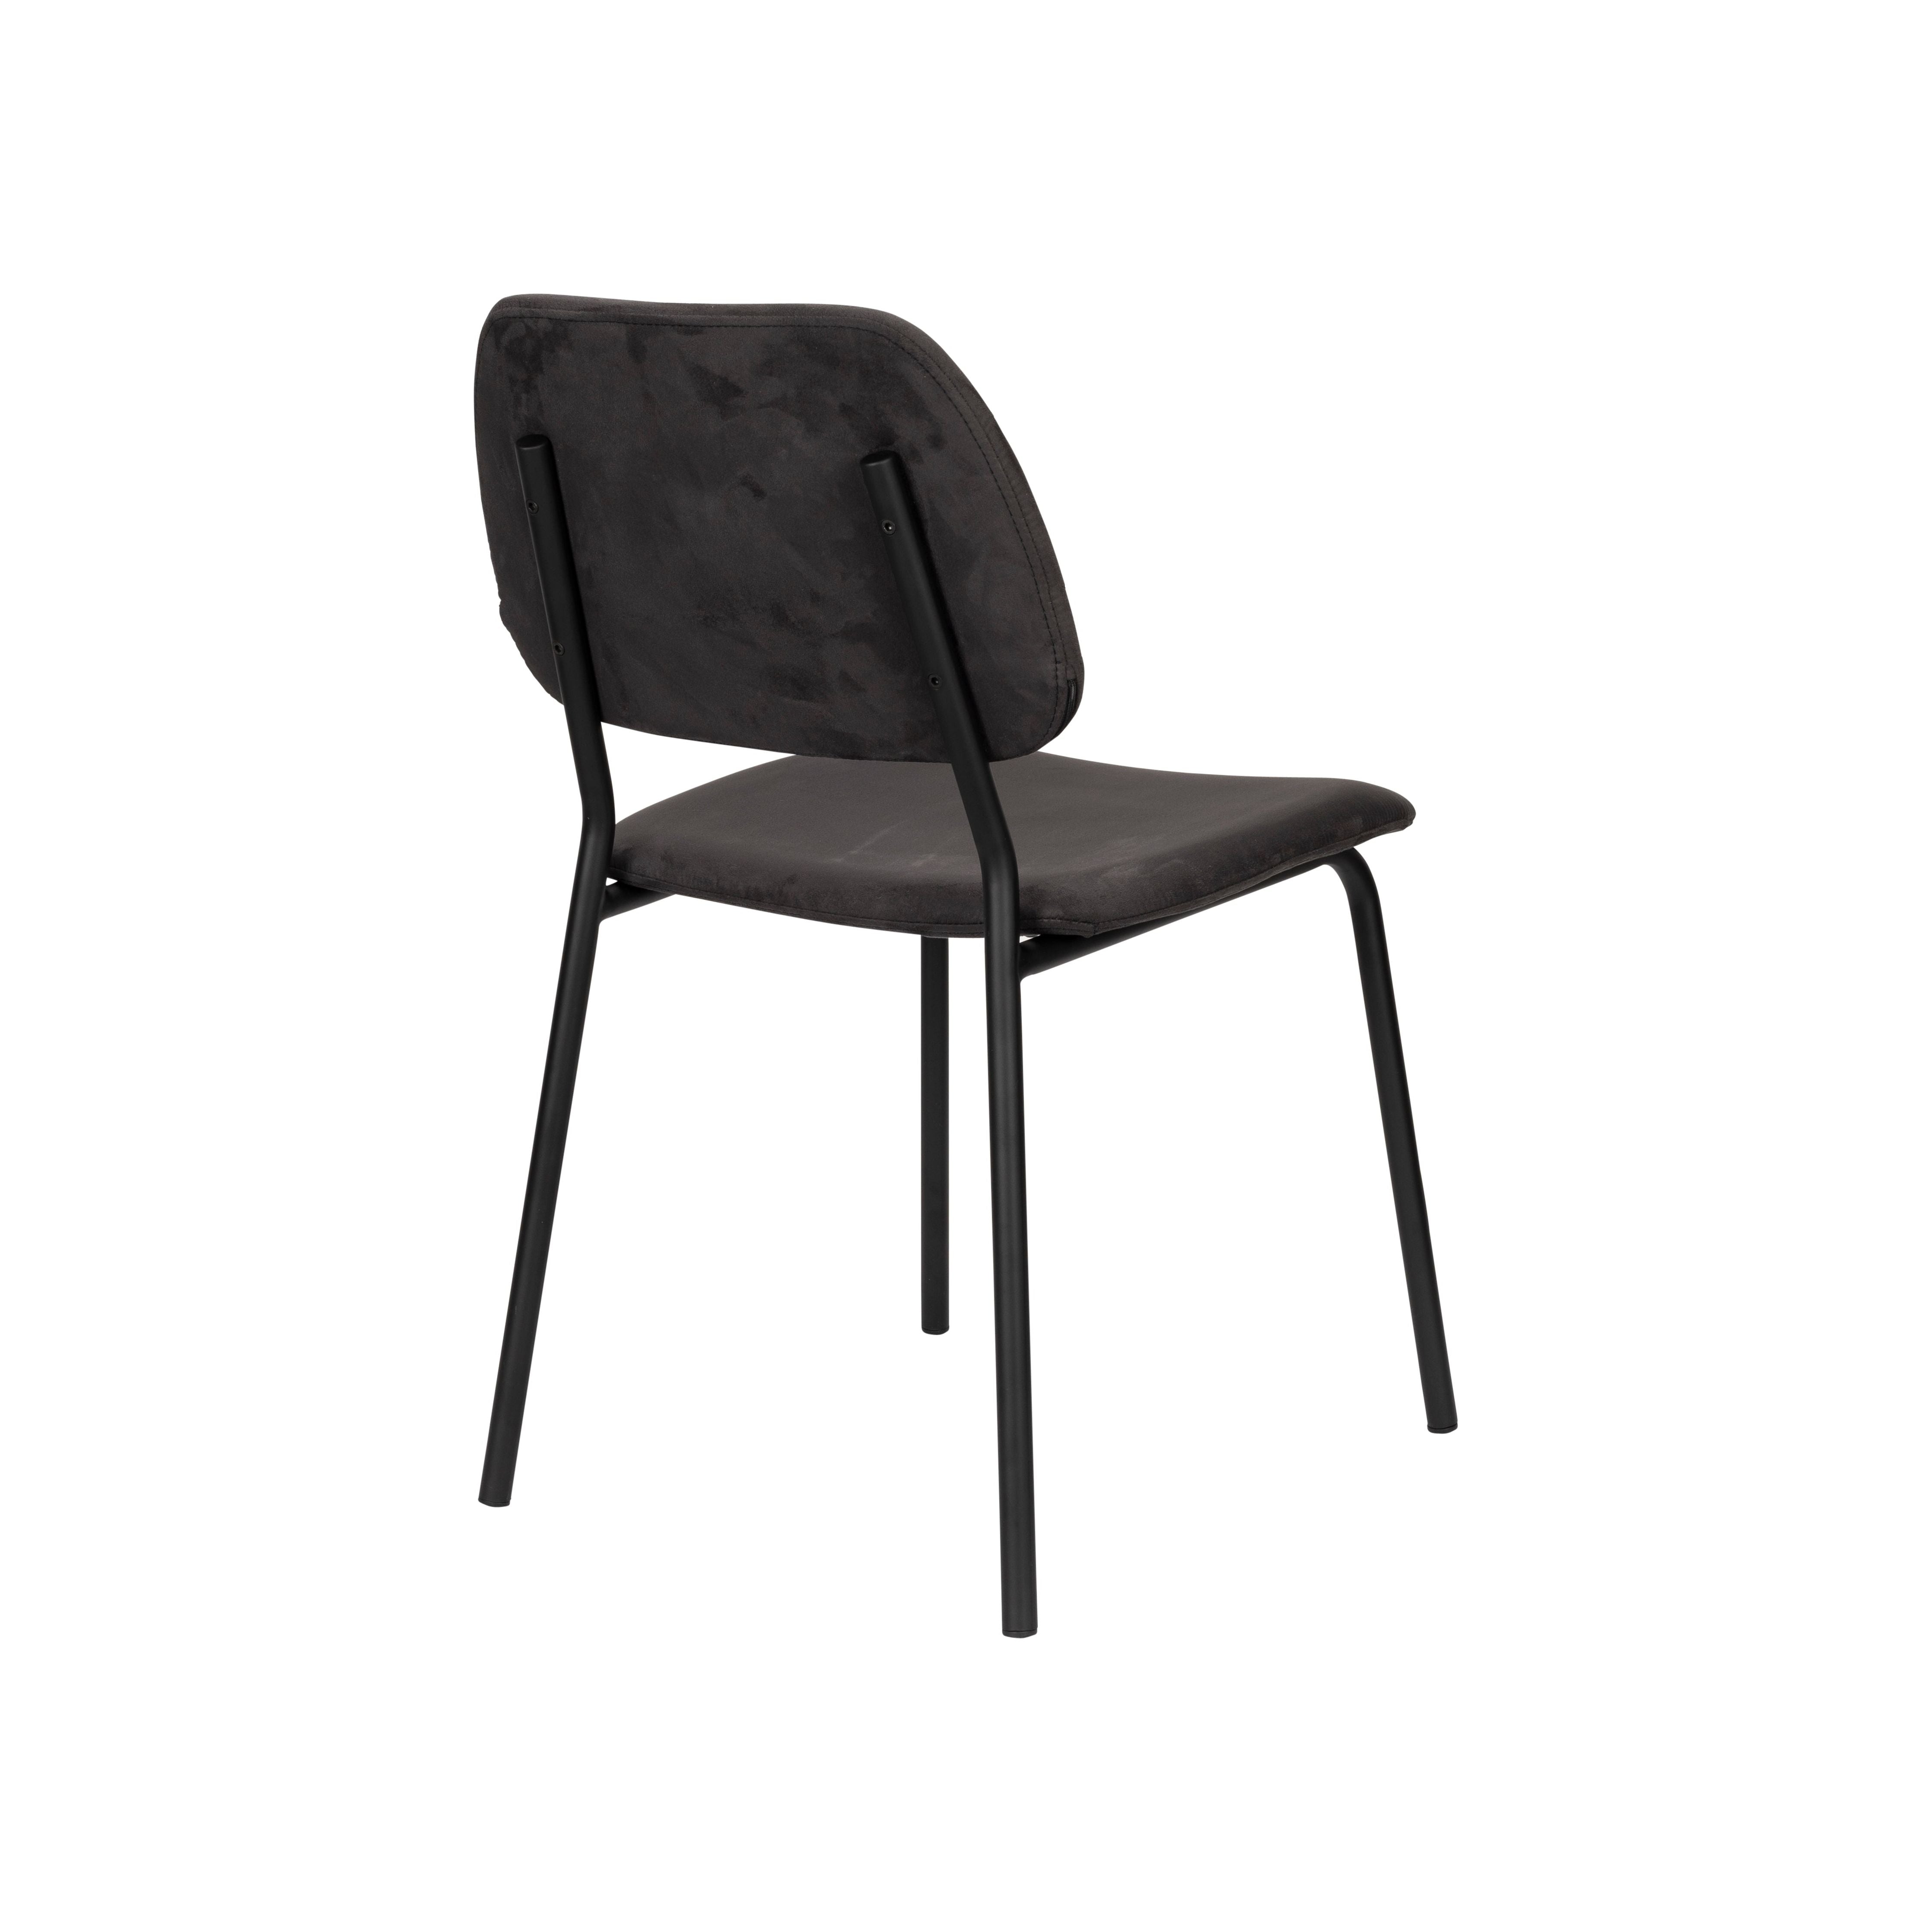 Chair darby black